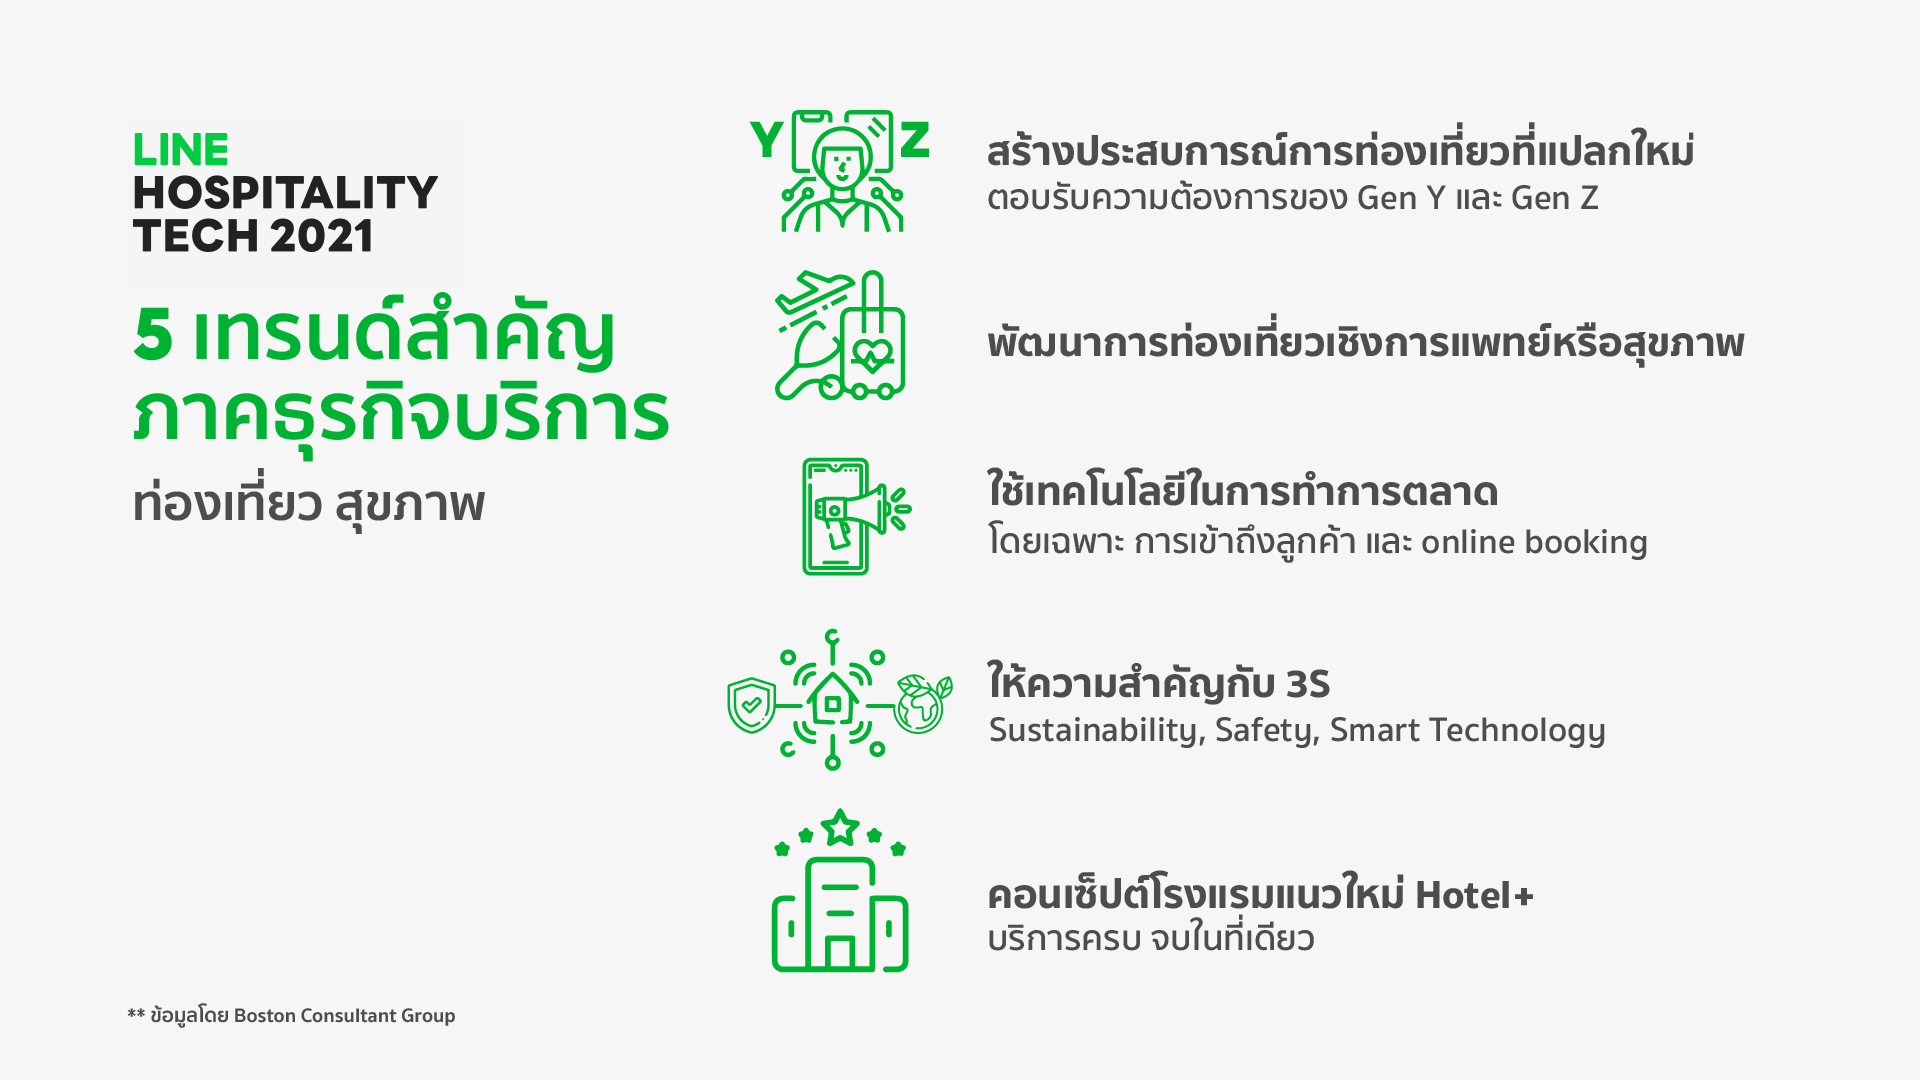 LINE Hospitality Tech 2021 ชูเทคโนโลยีท่องเที่ยว สุขภาพโอกาสใหม่ พลิกฟื้นไทย หลังเปิดประเทศ